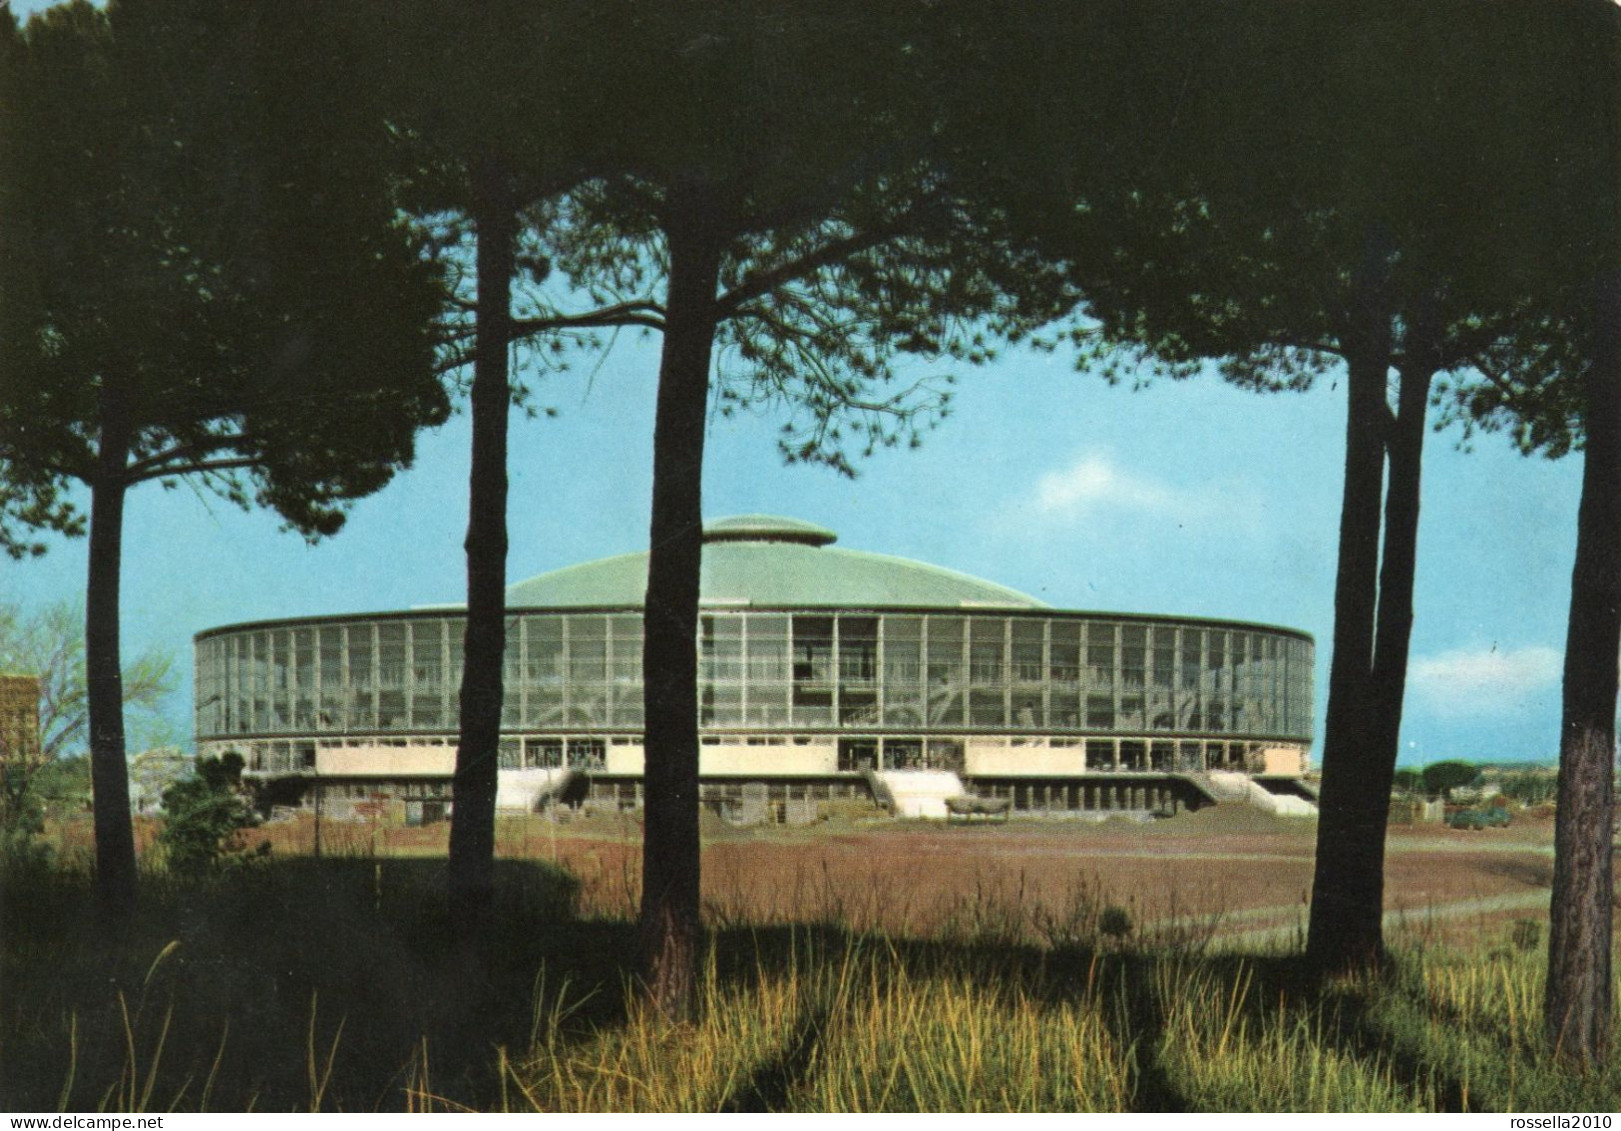 CARTOLINA  ITALIA 1966 ROMA EUR PALAZZO DELLO SPORT Italy Postcard ITALIEN Ansichtskarten - Stadiums & Sporting Infrastructures